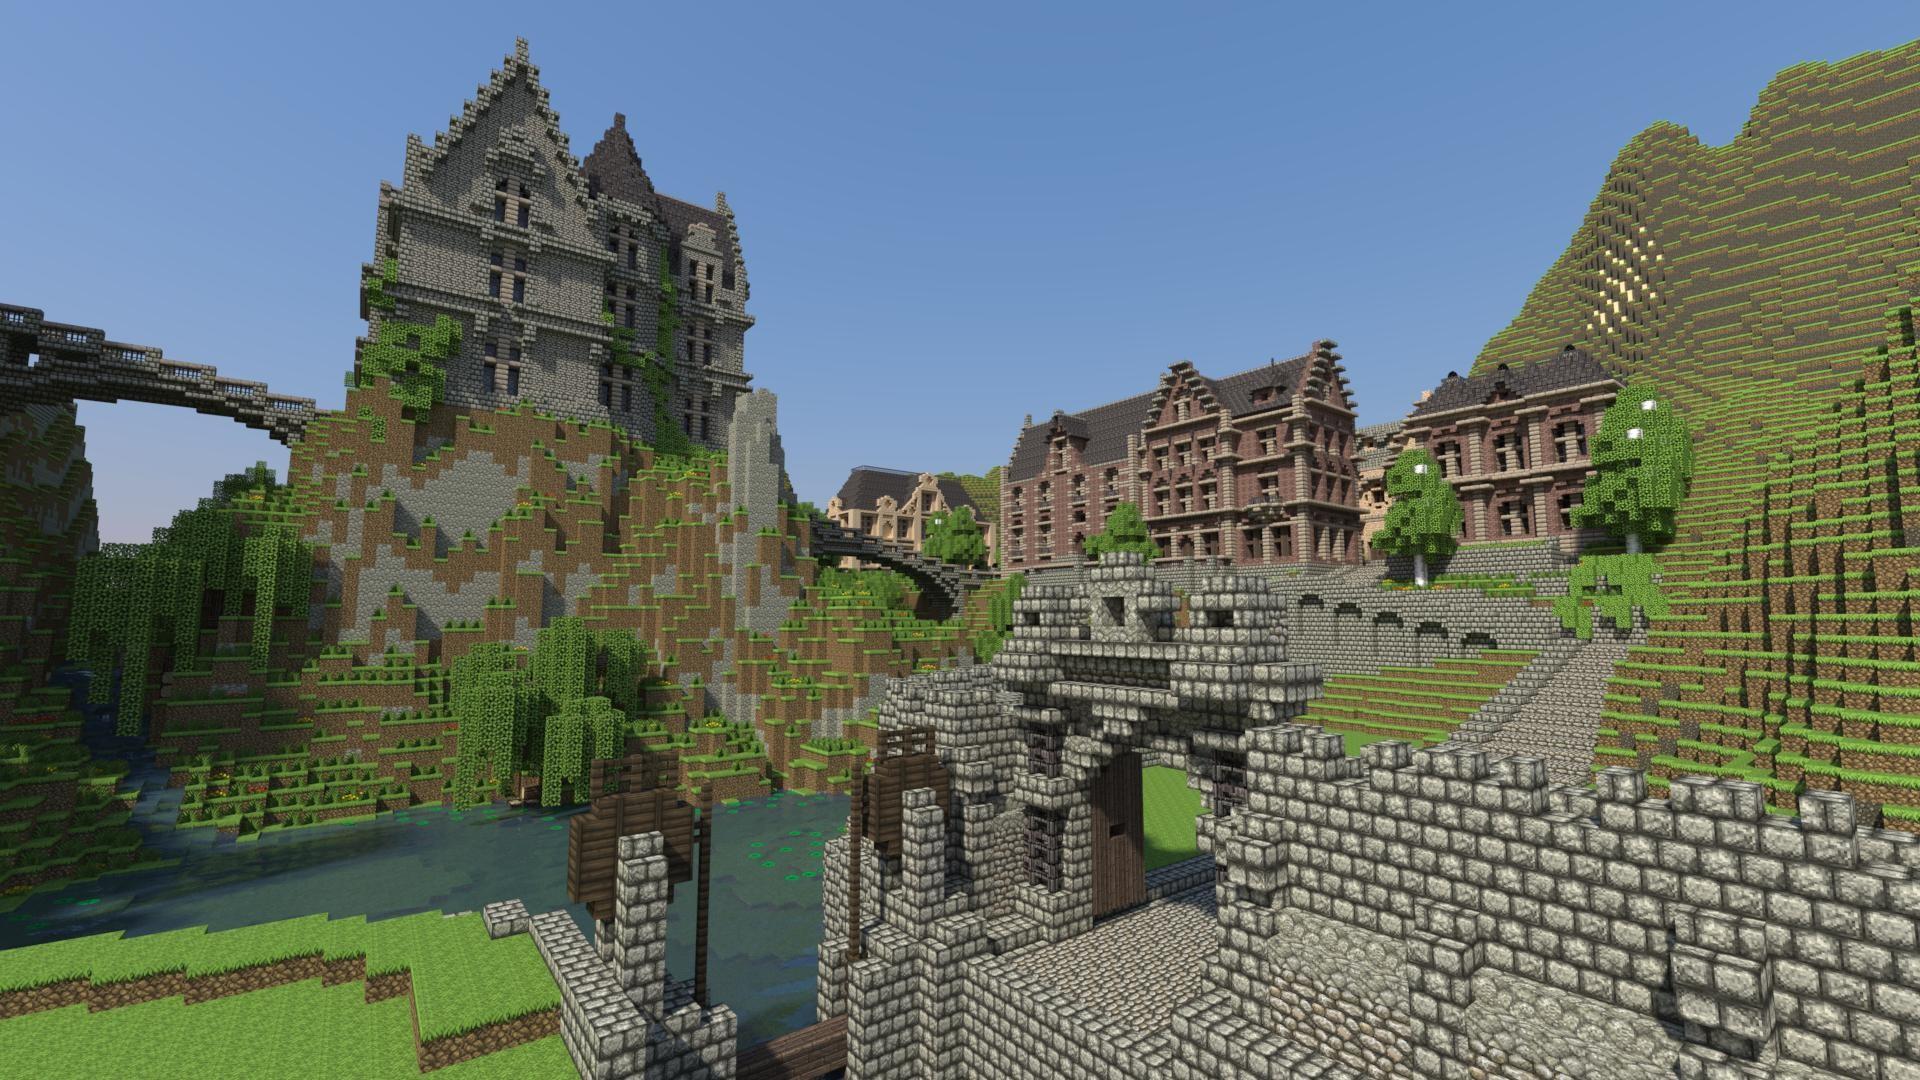 Wallpaper, building, Tourism, Minecraft, village, castle, screen